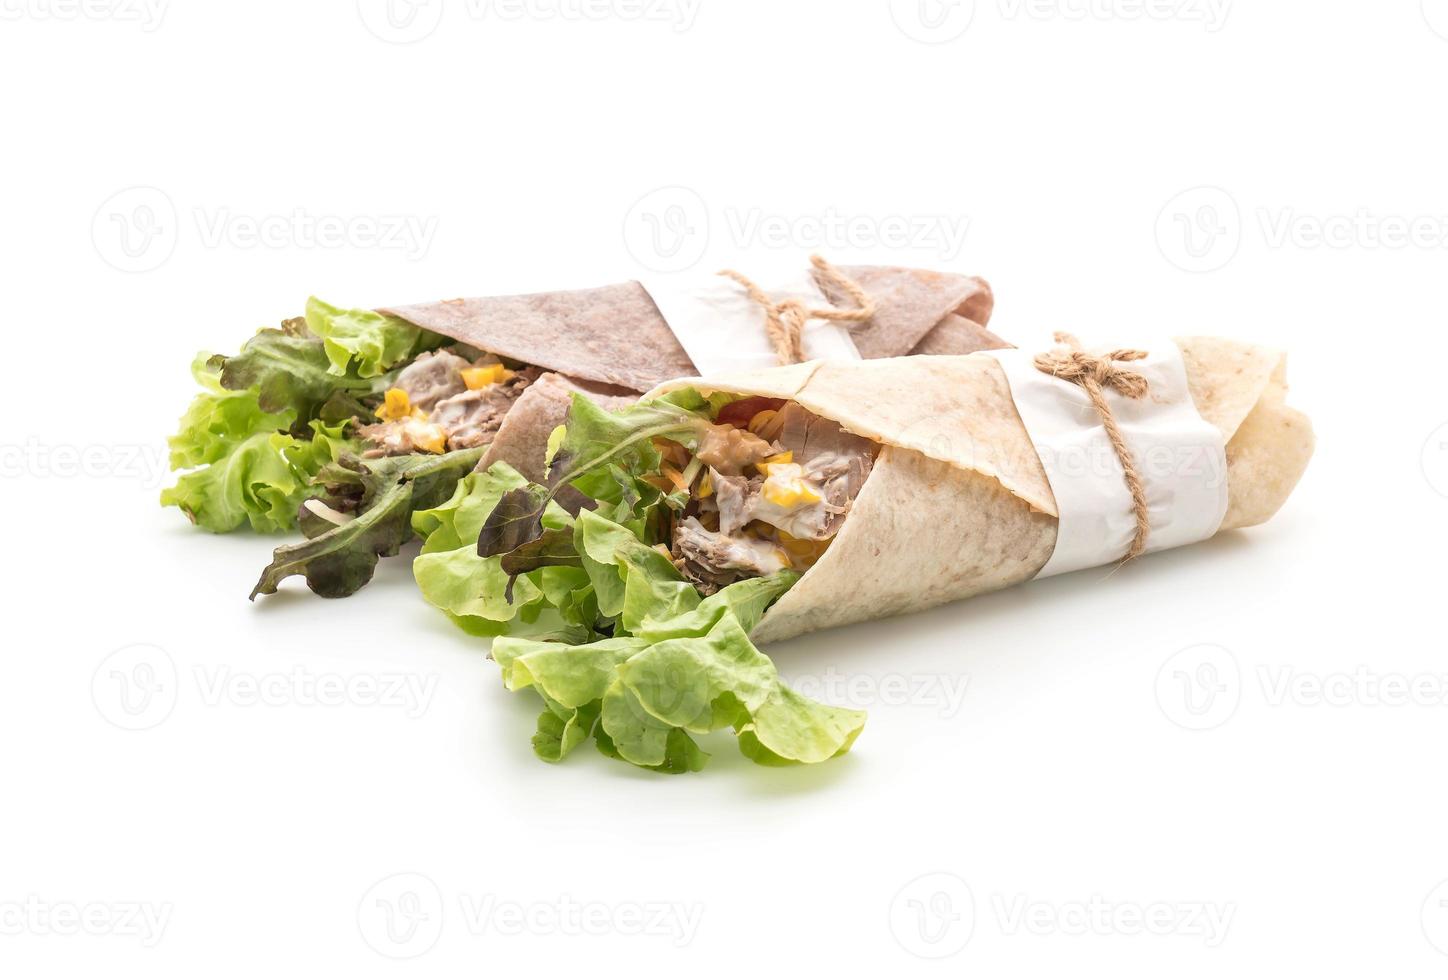 linda salladsrulle med tonfisk majssallad på vit bakgrund foto